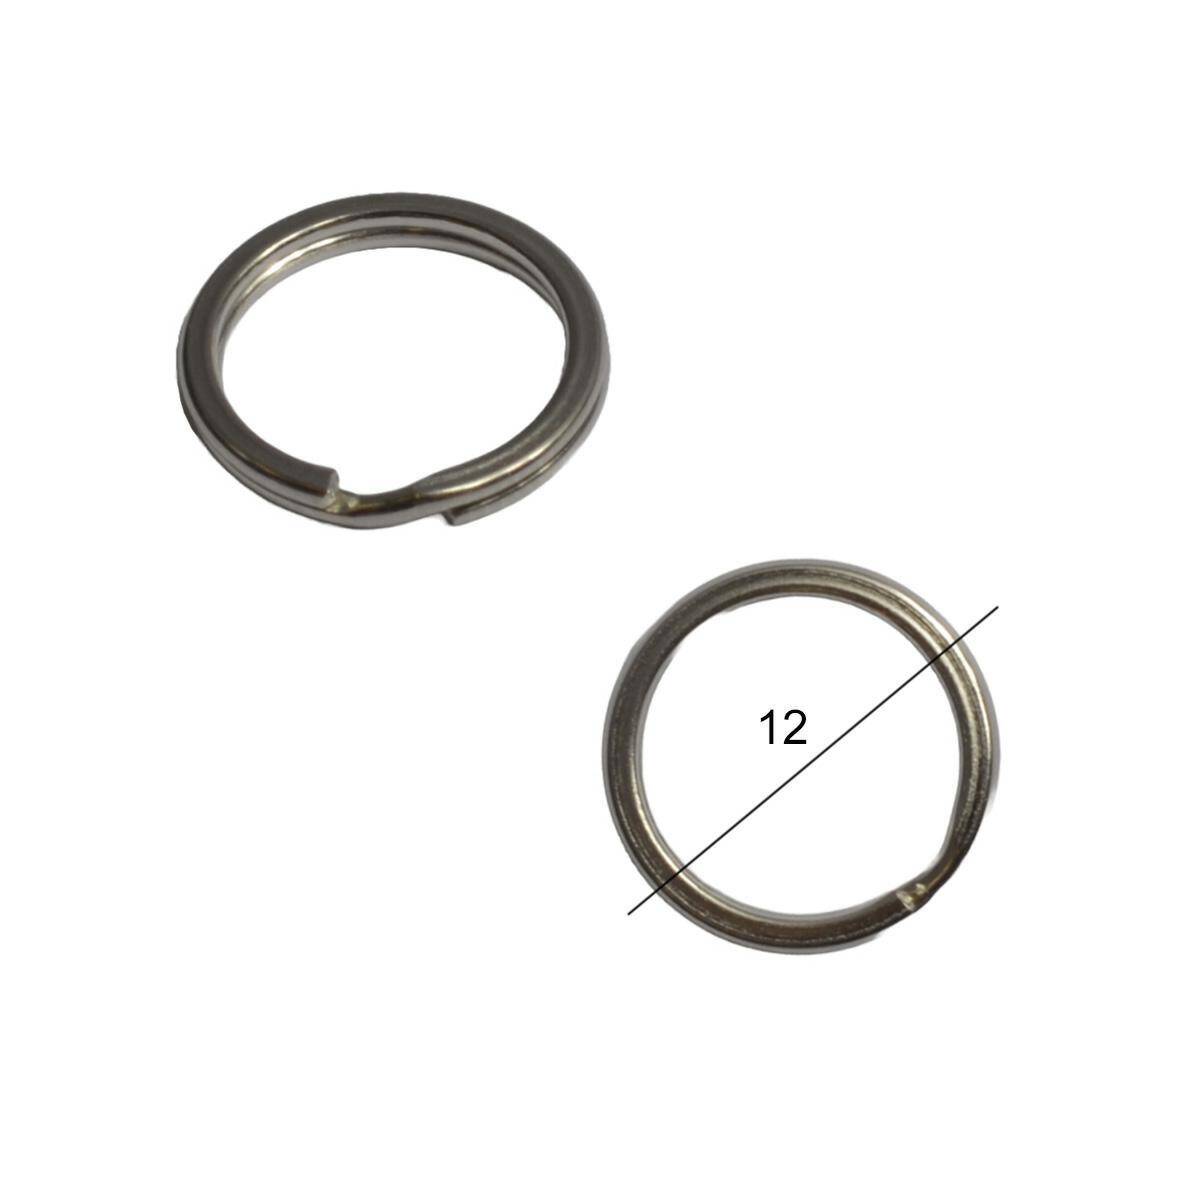 Key rings - flat - 12 mm